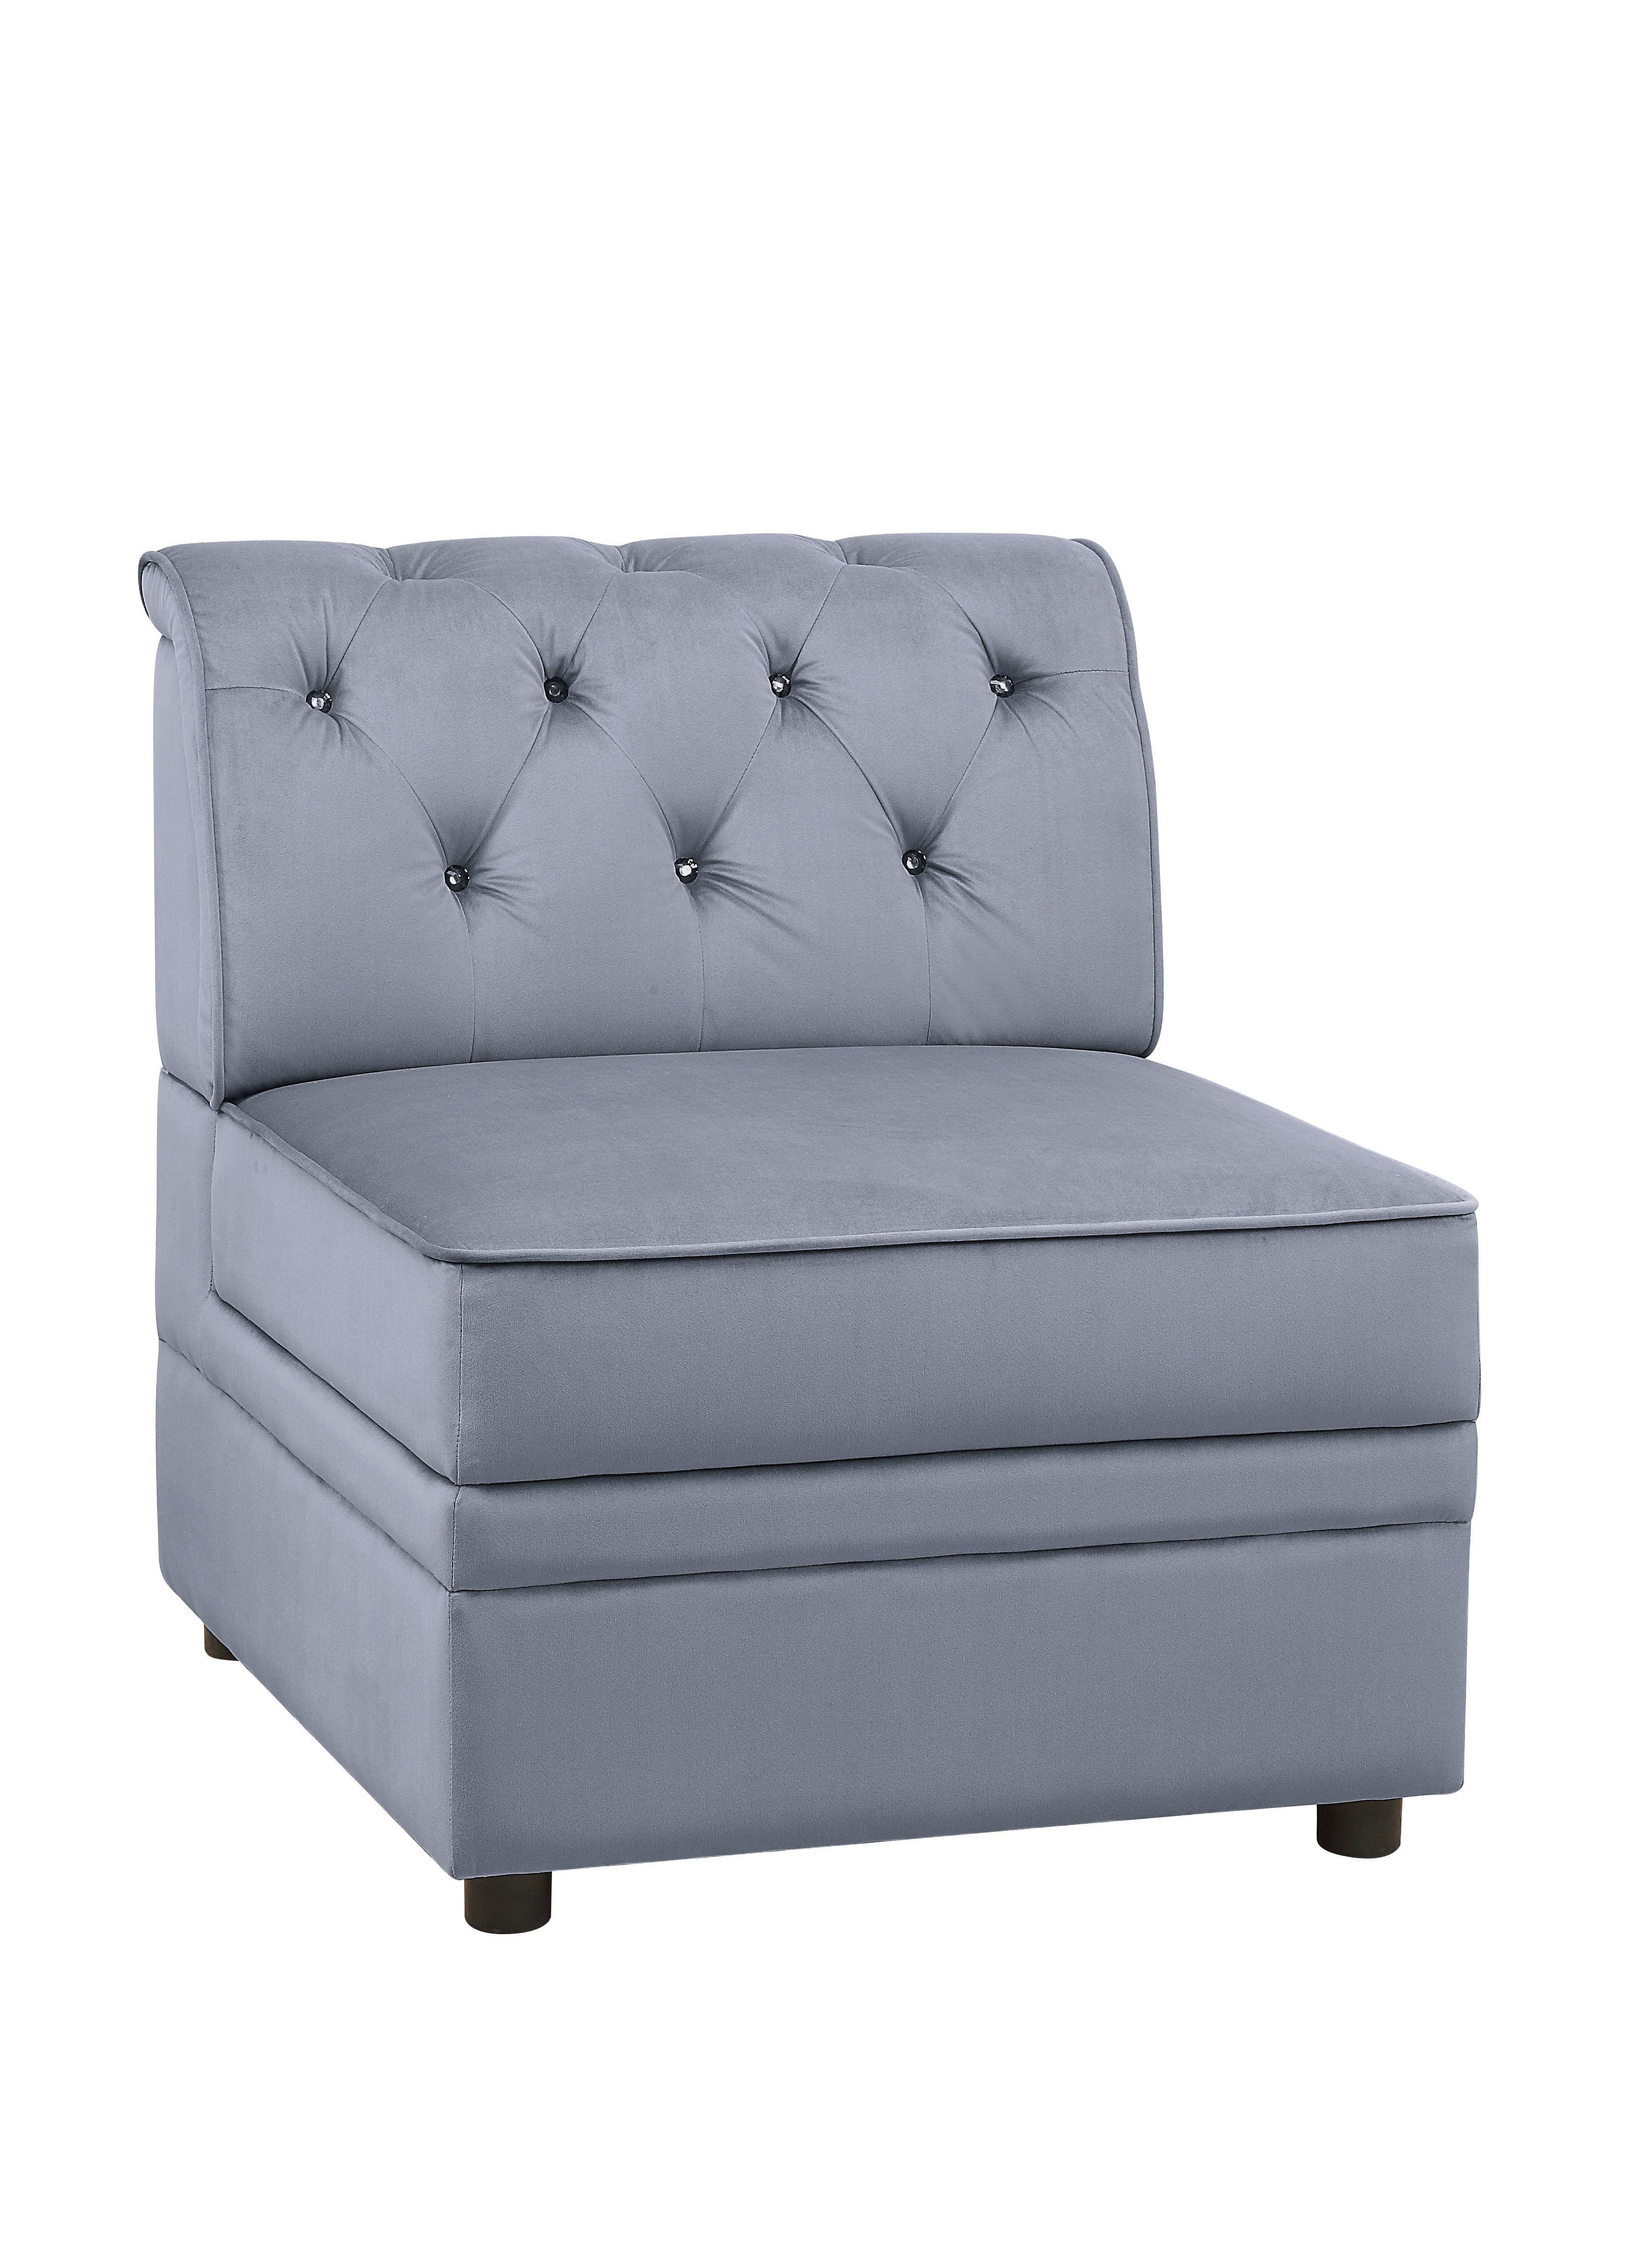 Picture of ACME 53305 Bois II Modular Armless Chair - Gray Velvet - 33 x 29 x 34 in.